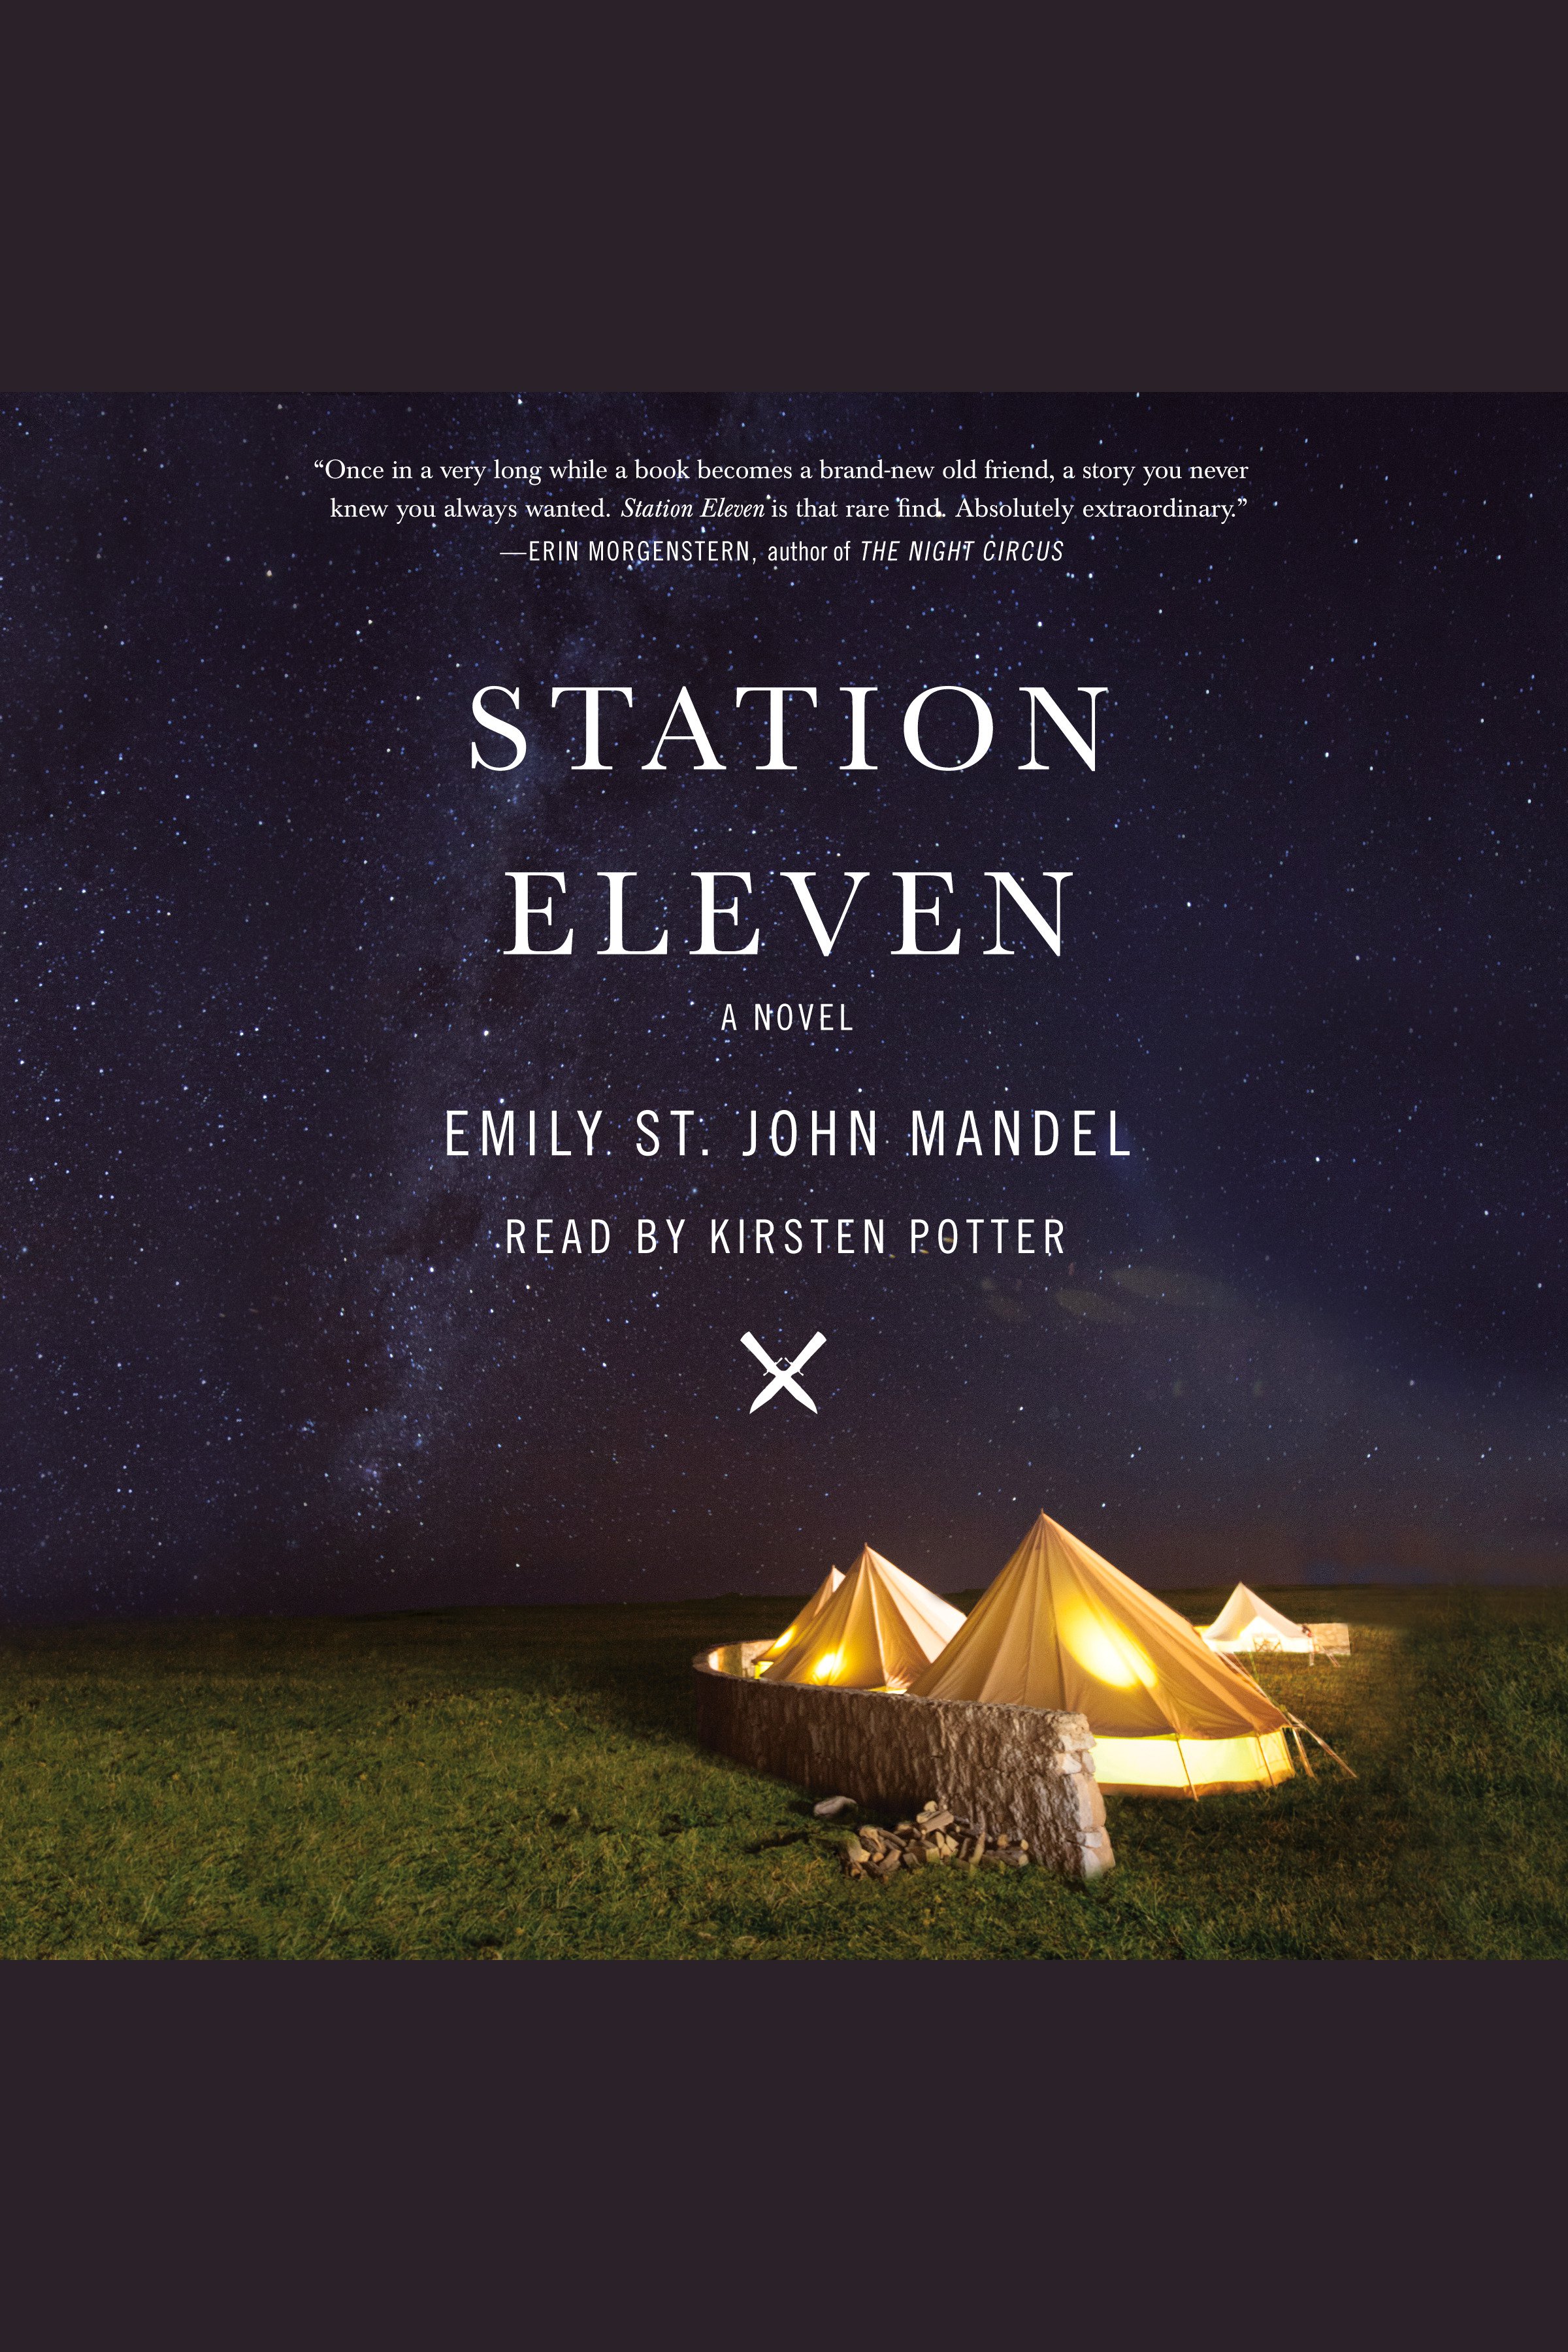 Station eleven cover image